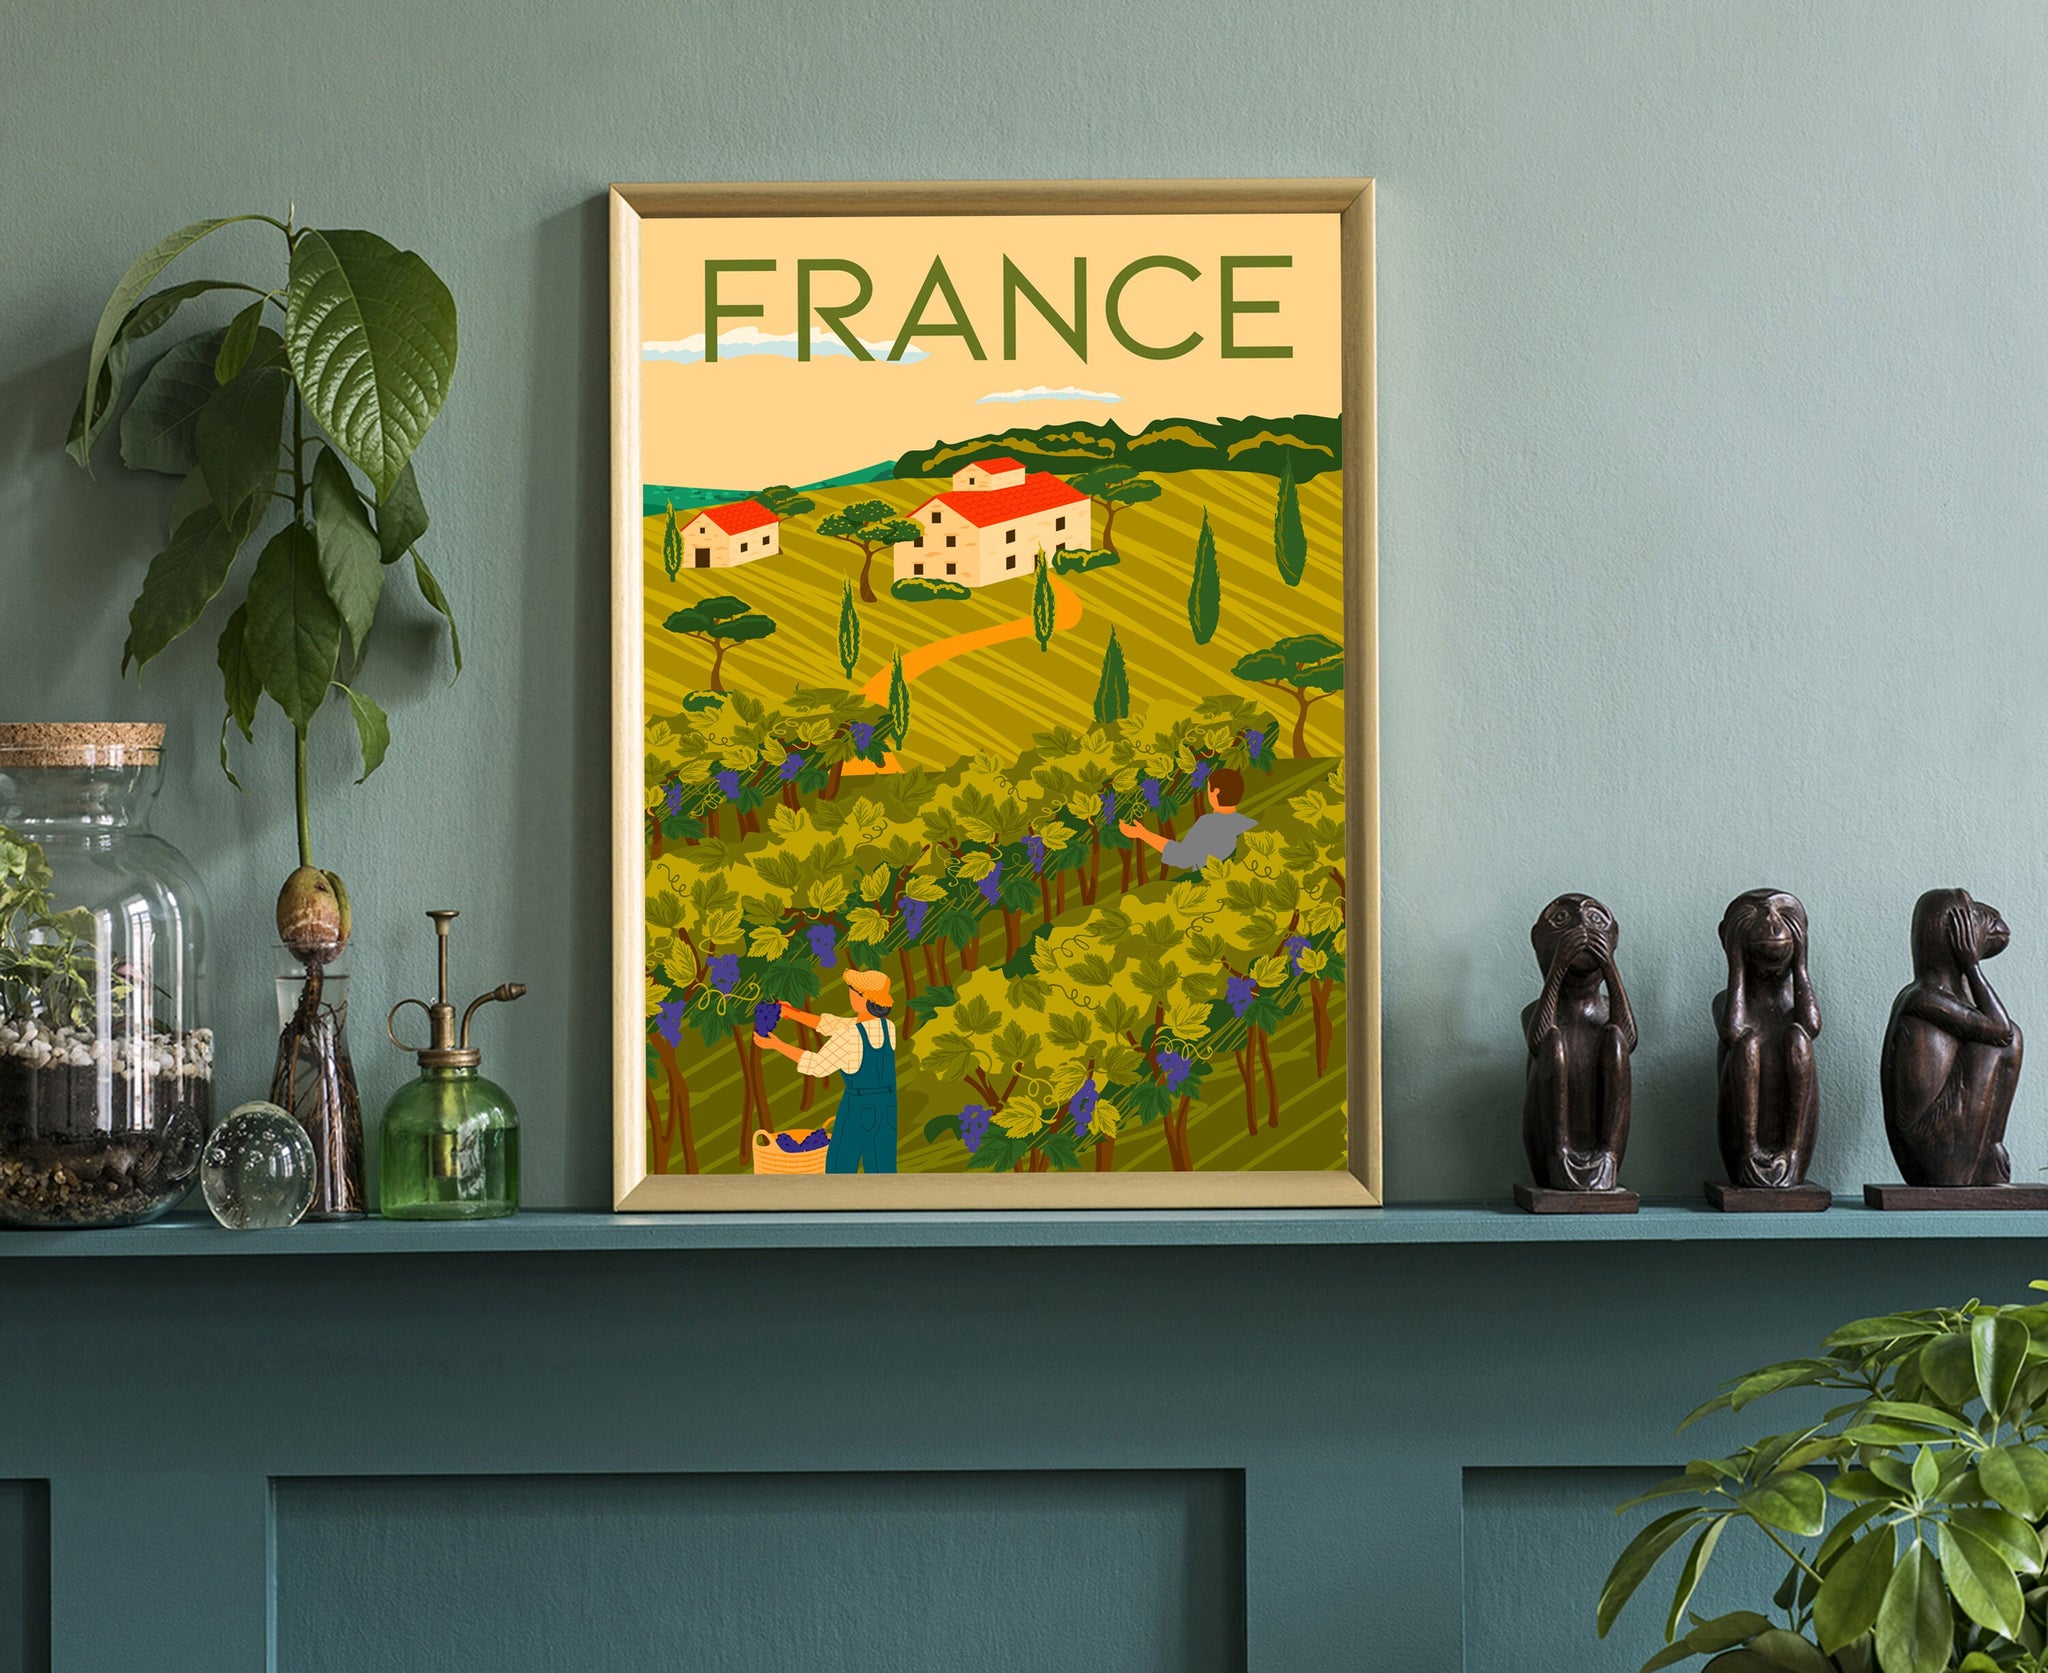 FRANCE Travel Poster, FRANCE Garden Cityscape and Landmark Poster Wall Art, Home Wall Art, Office Wall Decor